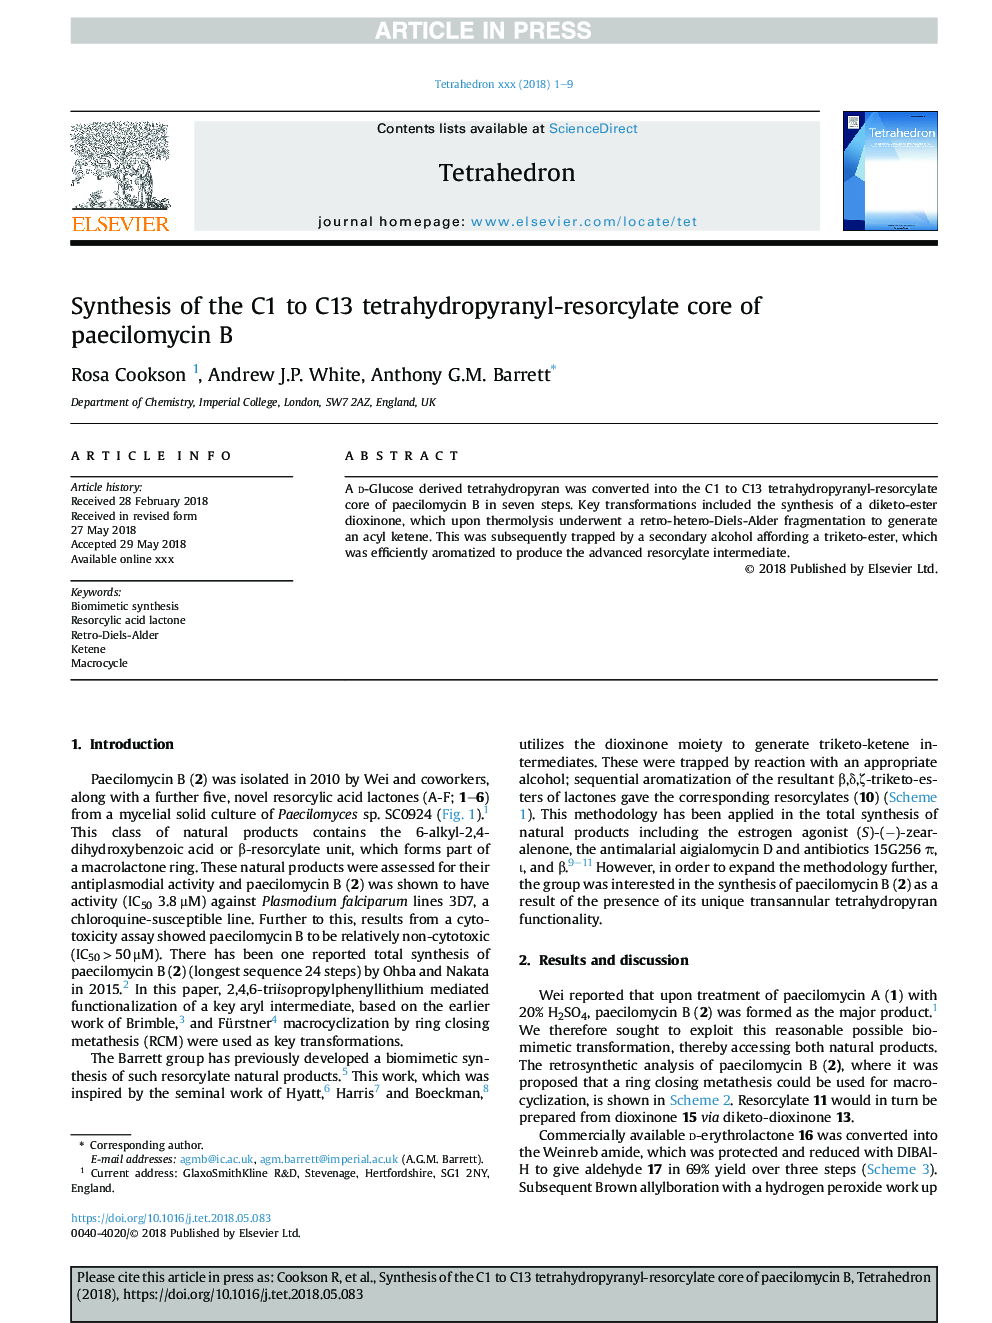 Synthesis of the C1 to C13 tetrahydropyranyl-resorcylate core of paecilomycin B